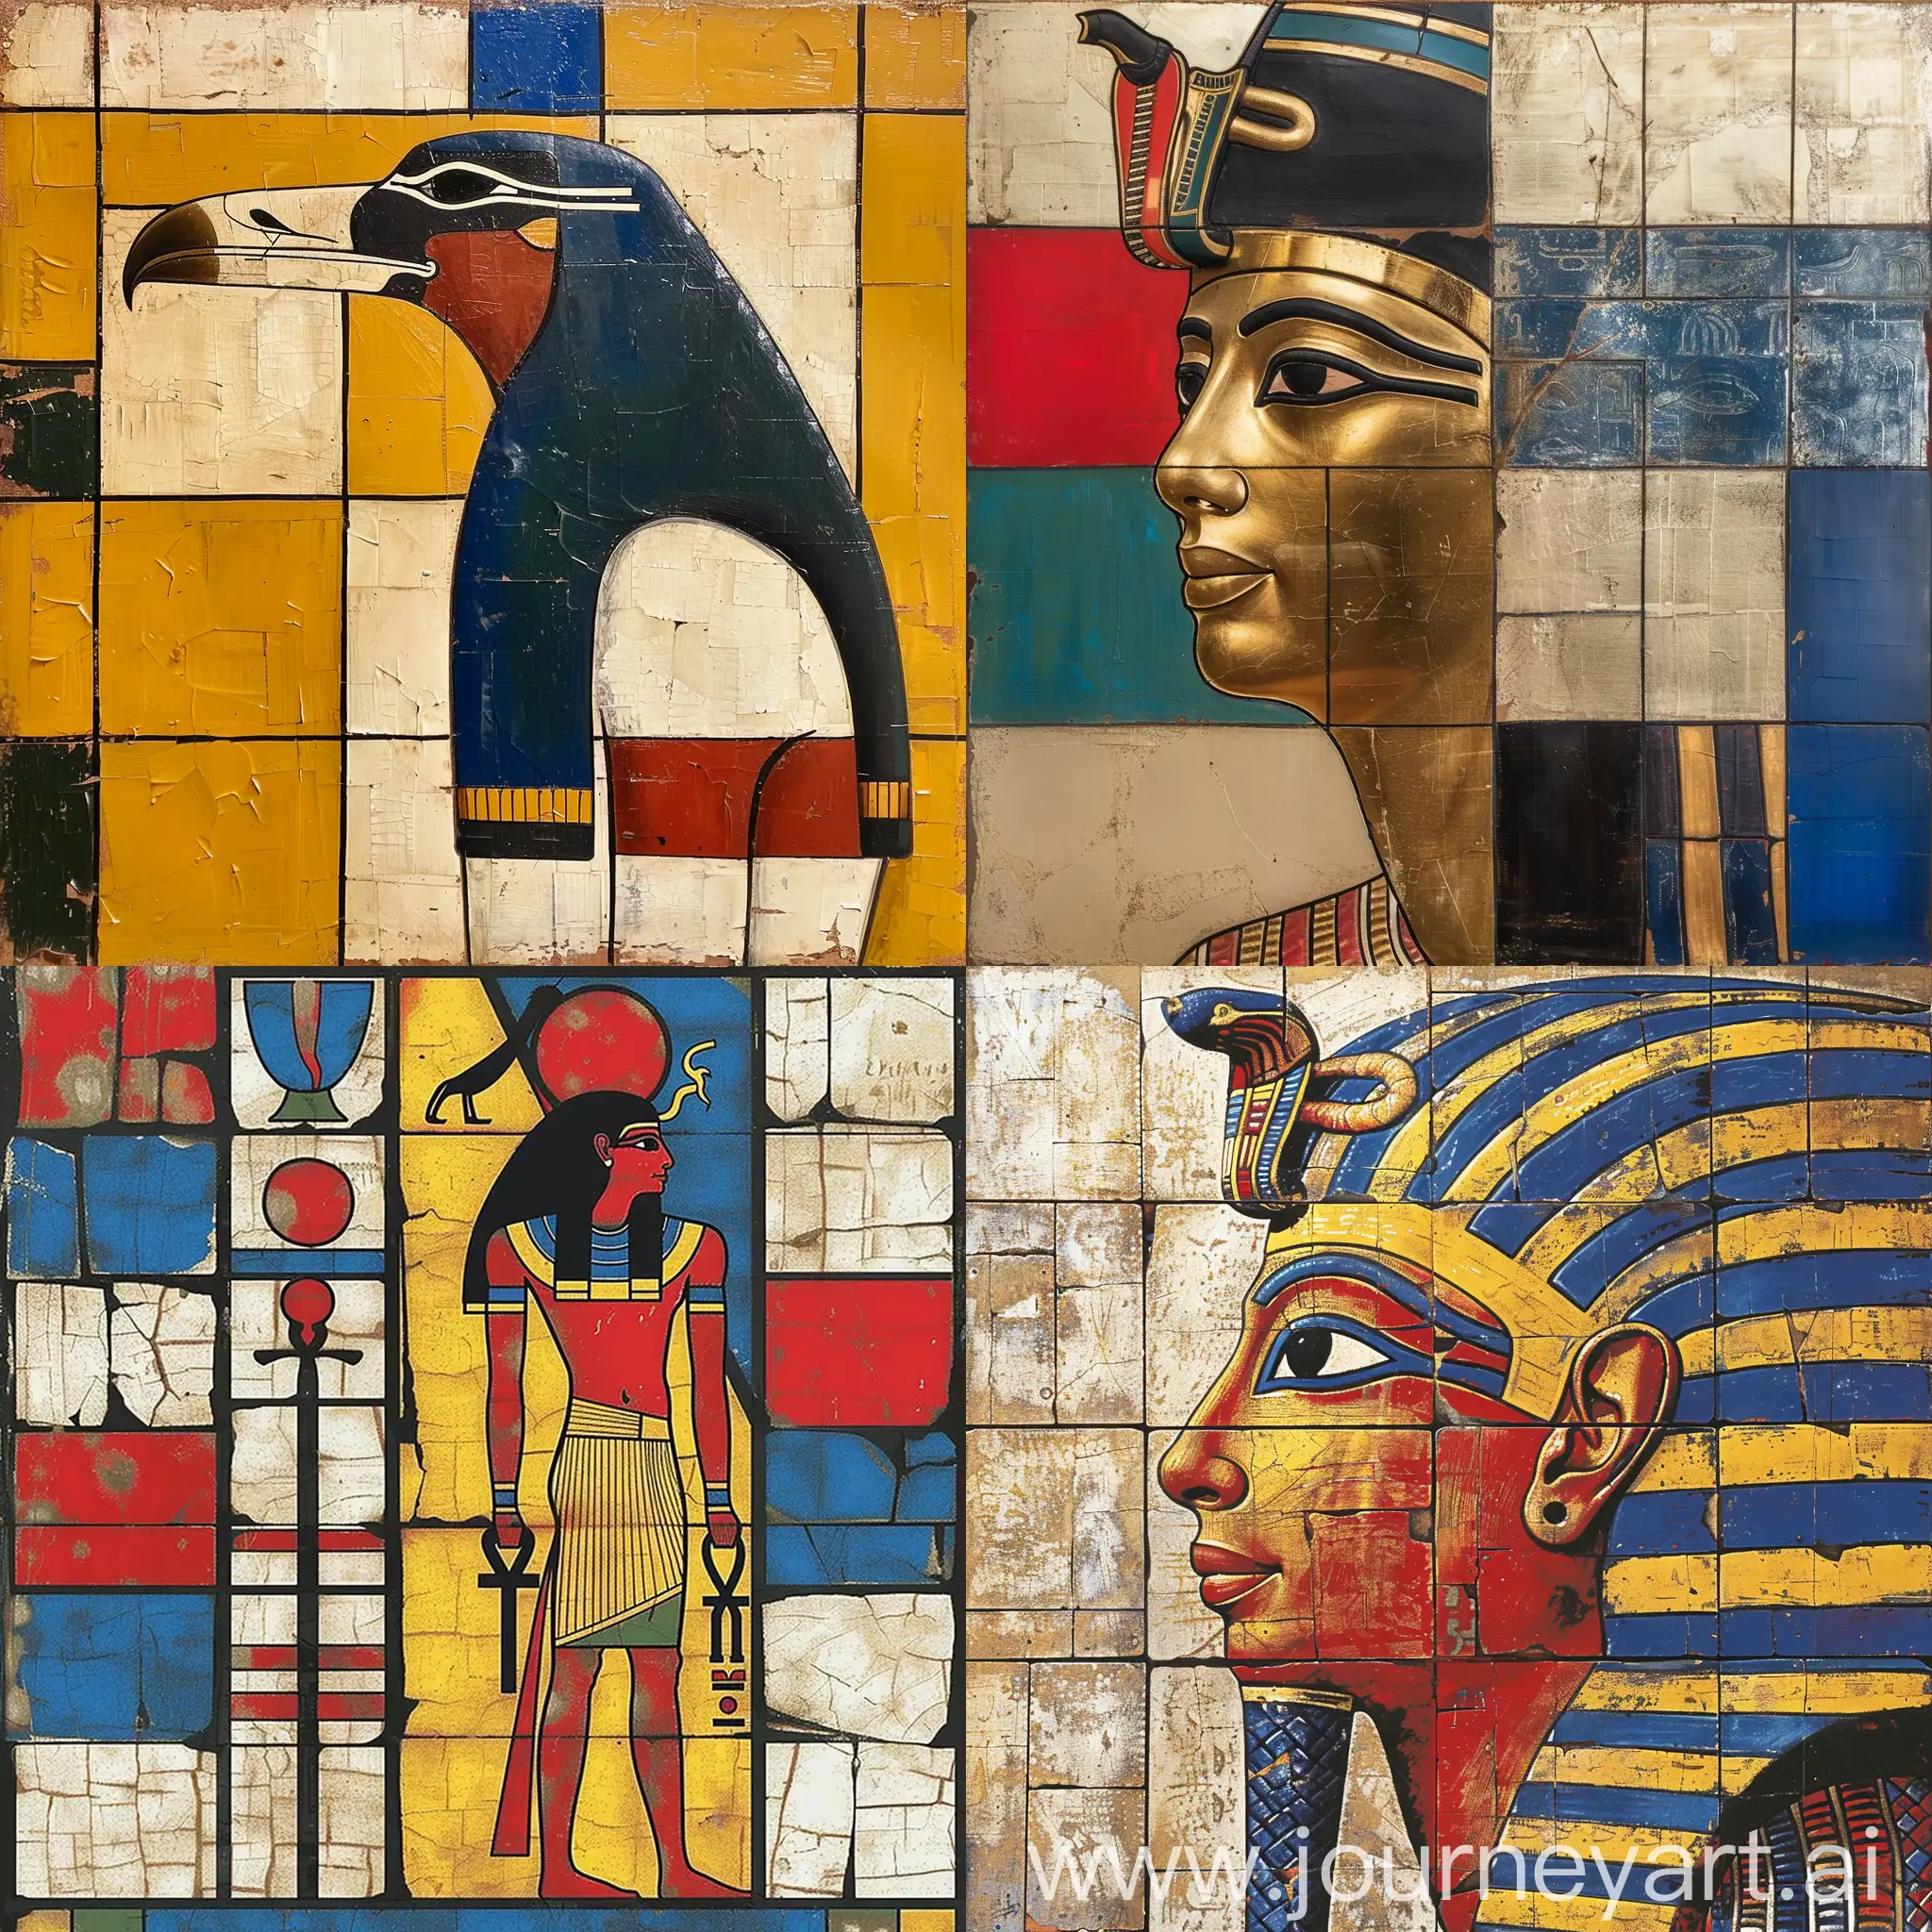 Modernized-Egyptian-Art-with-Piet-Mondrians-Influence